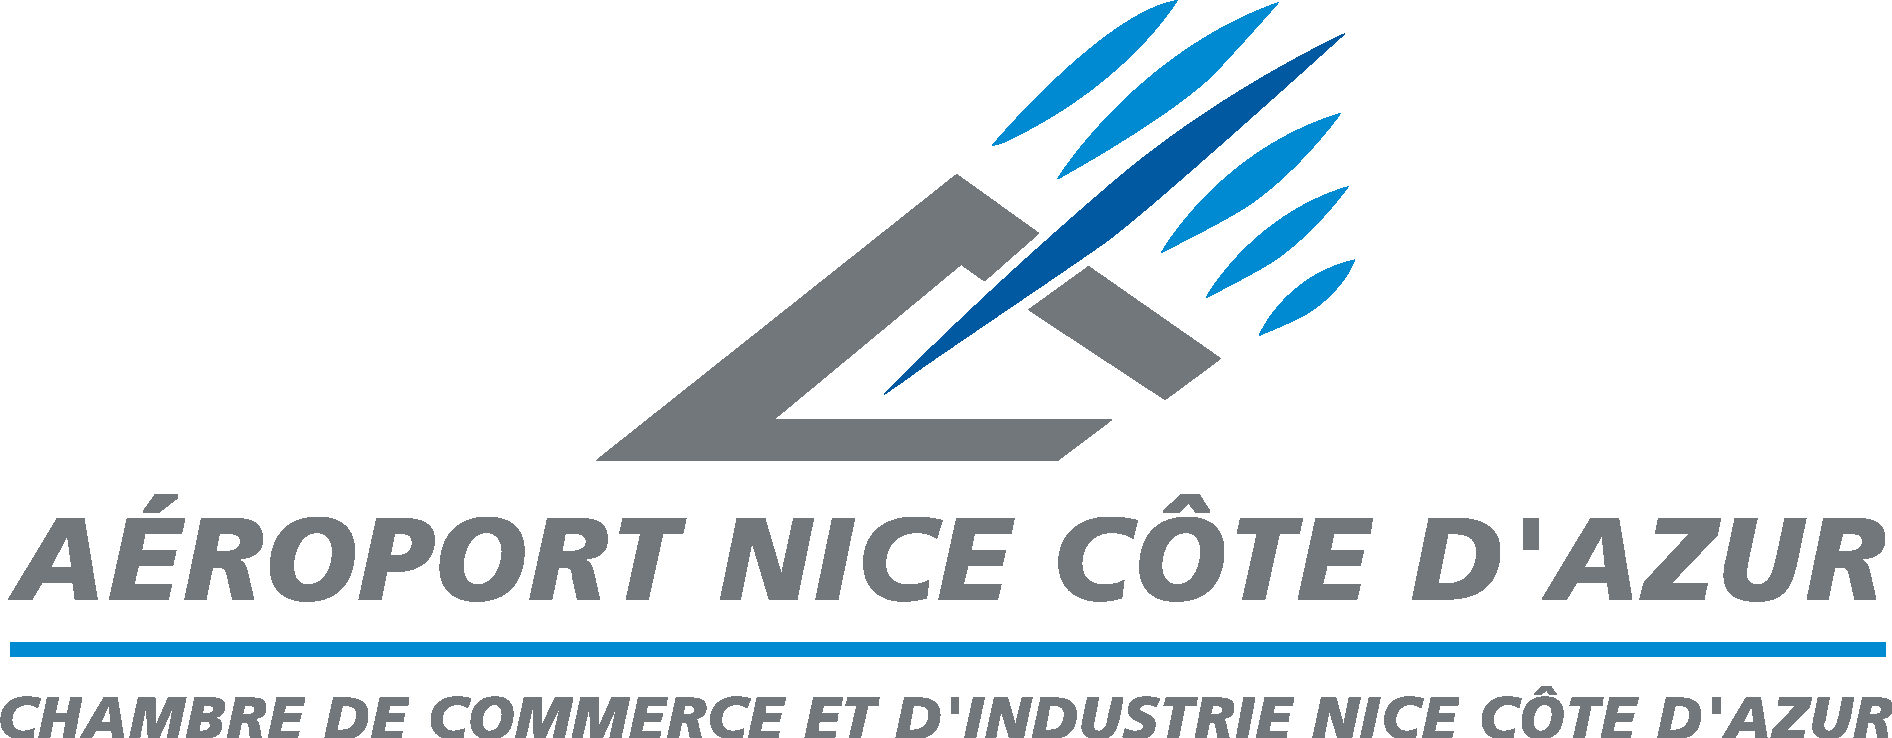 Aeroport Nice Cote D’Azu Logo Vector